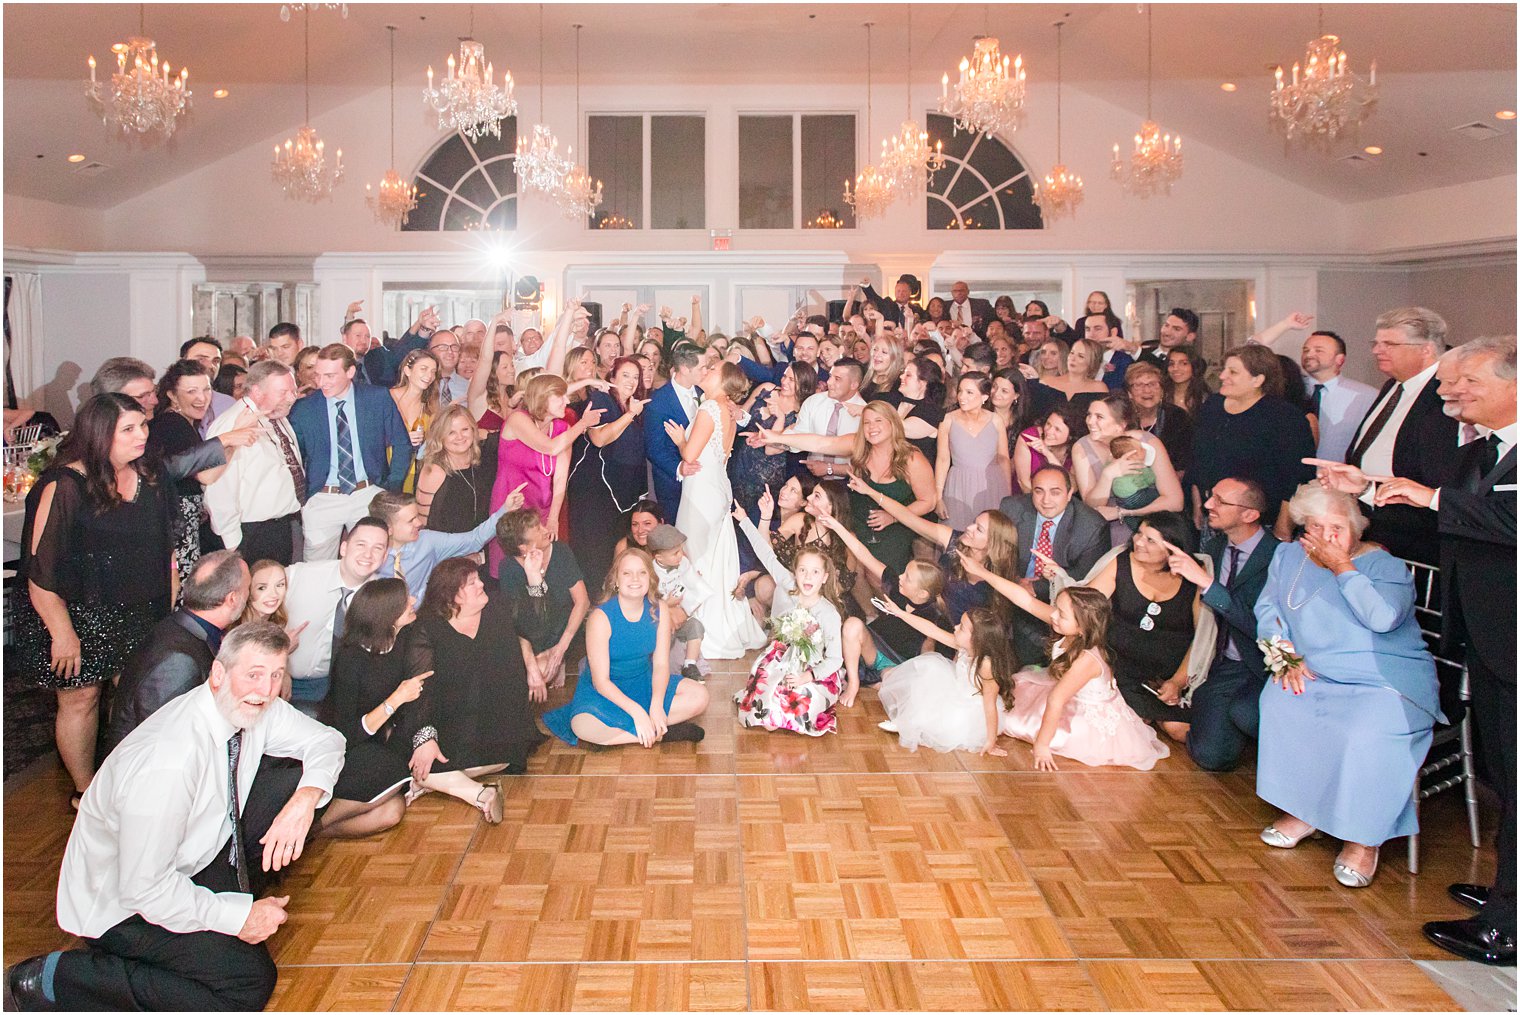 Idalia Photography photographs New York Country Club wedding reception fun